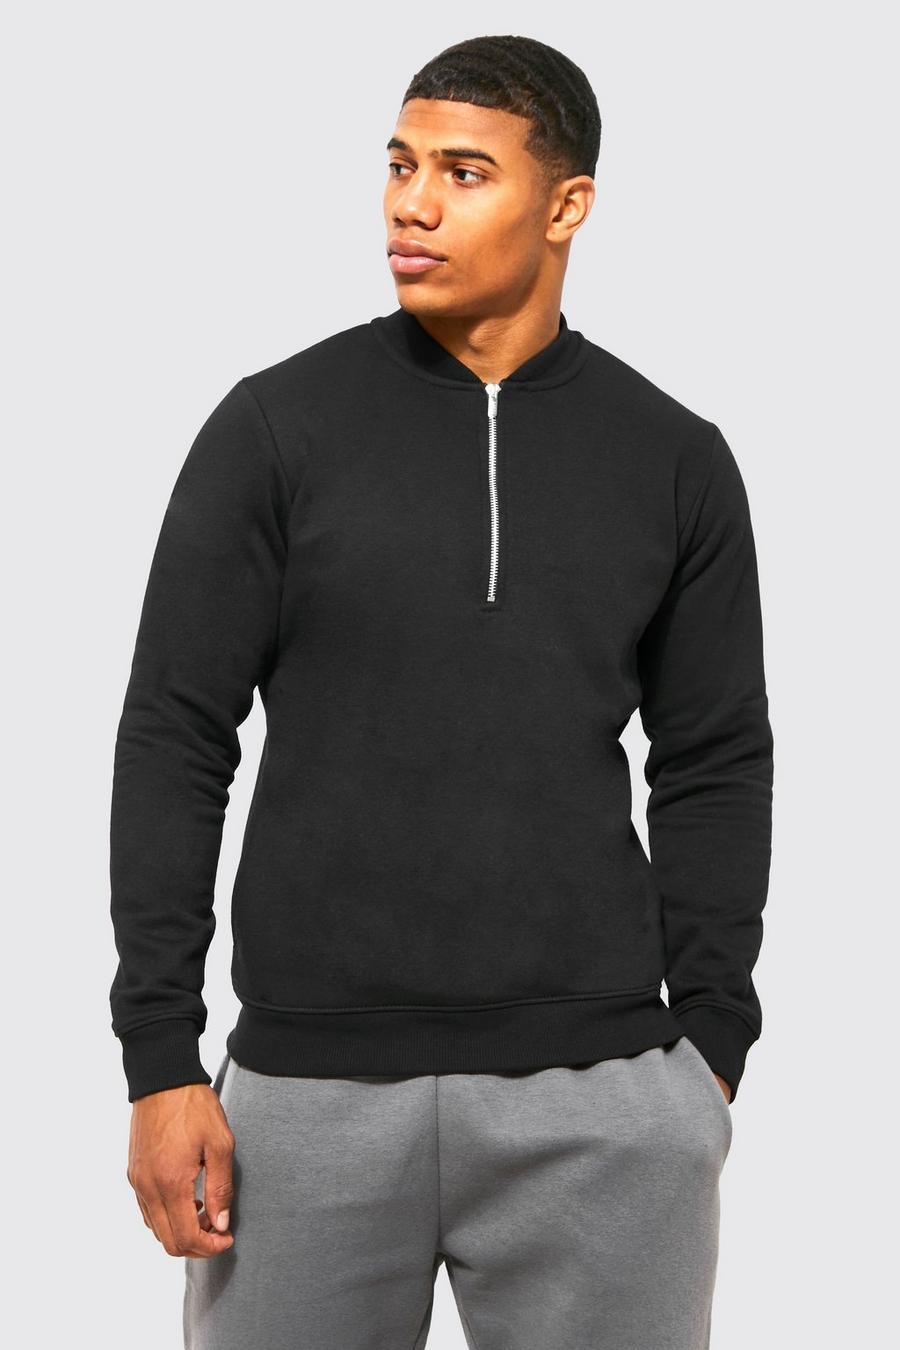 Black svart Sweatshirt i slim fit